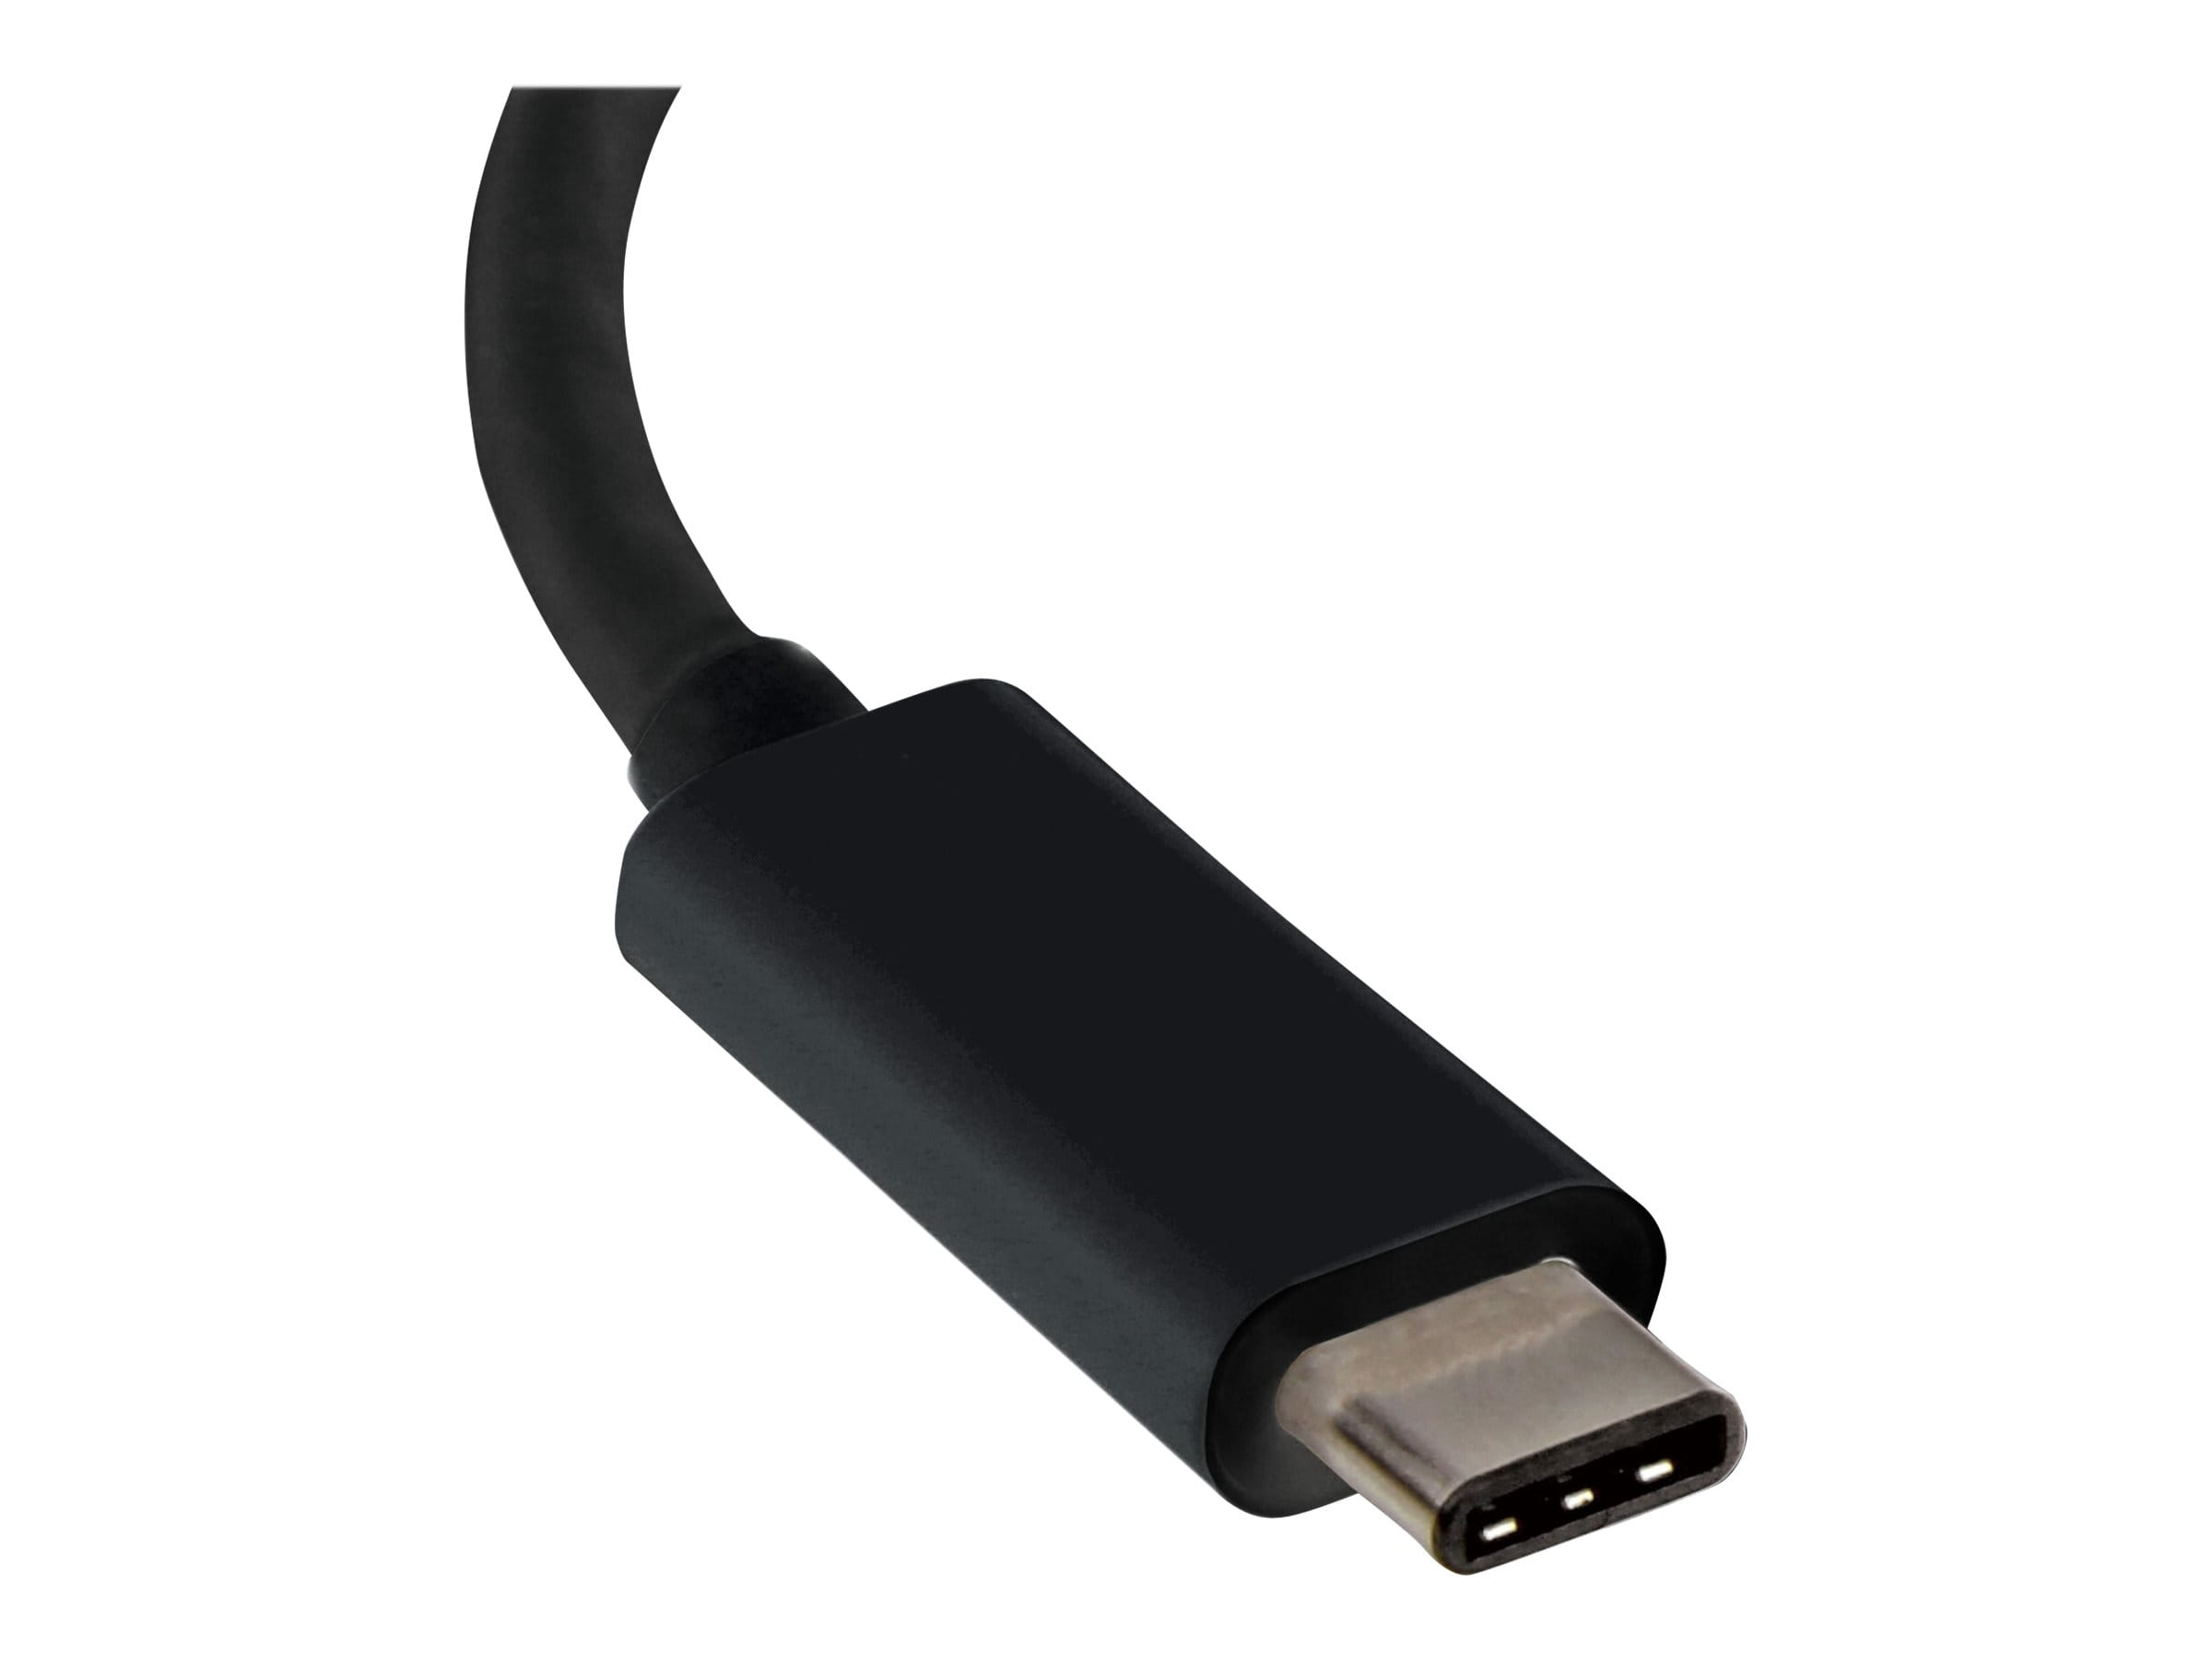 StarTech.com USB-C to VGA Adapter - Black - 1080p - Video Converter For Your MacBook Pro - USB C to VGA Display Dongle (CDP2VGA)